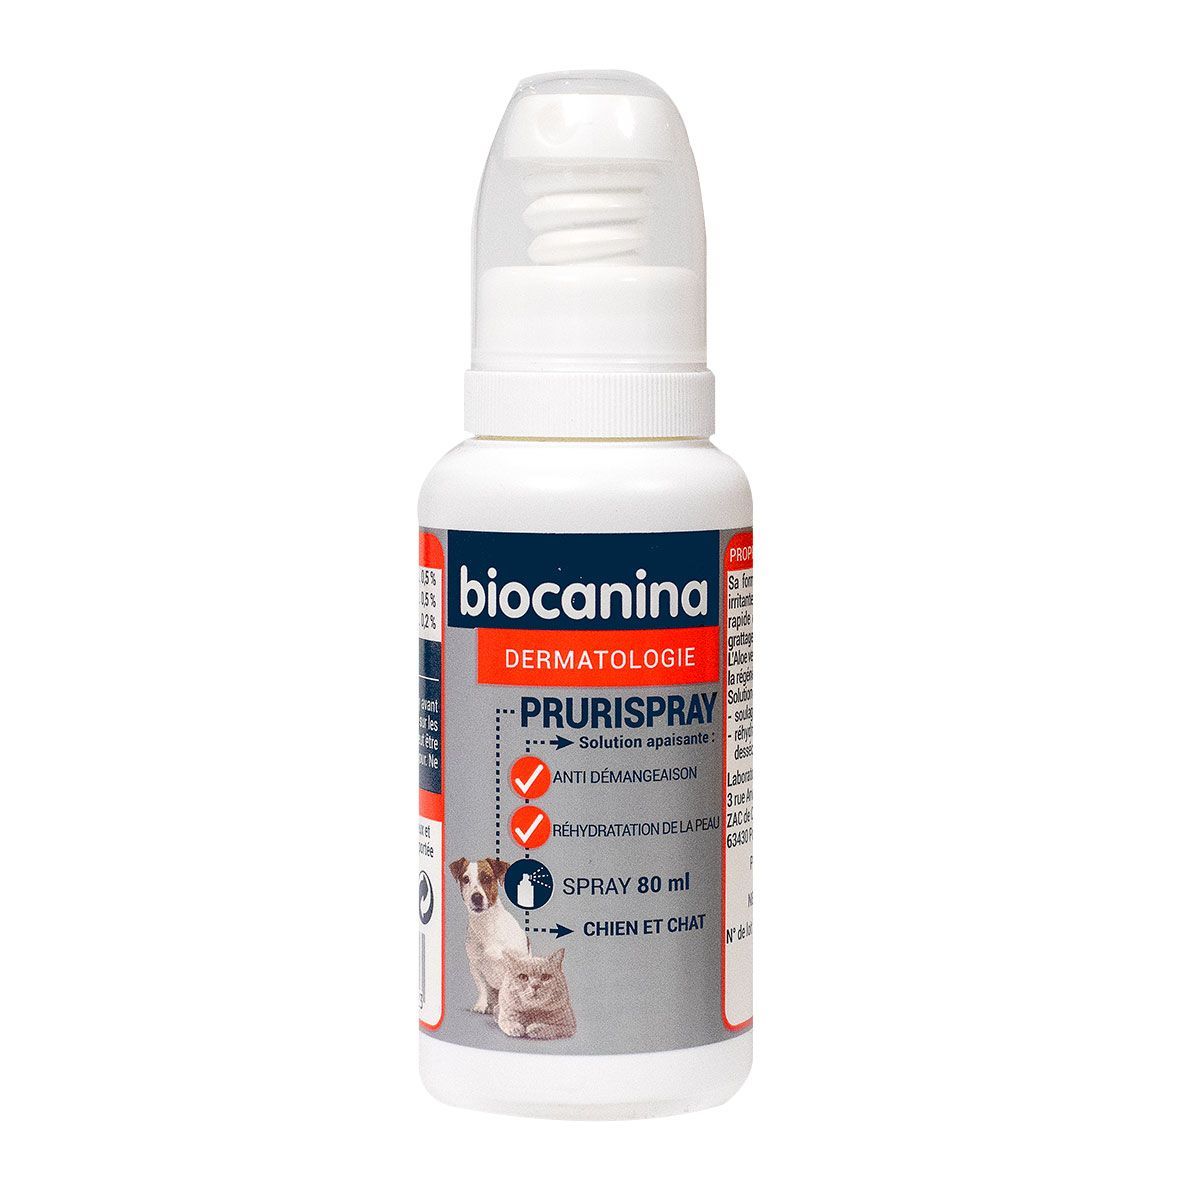 Biobellinda spray détachant désodorisant et anti acarien